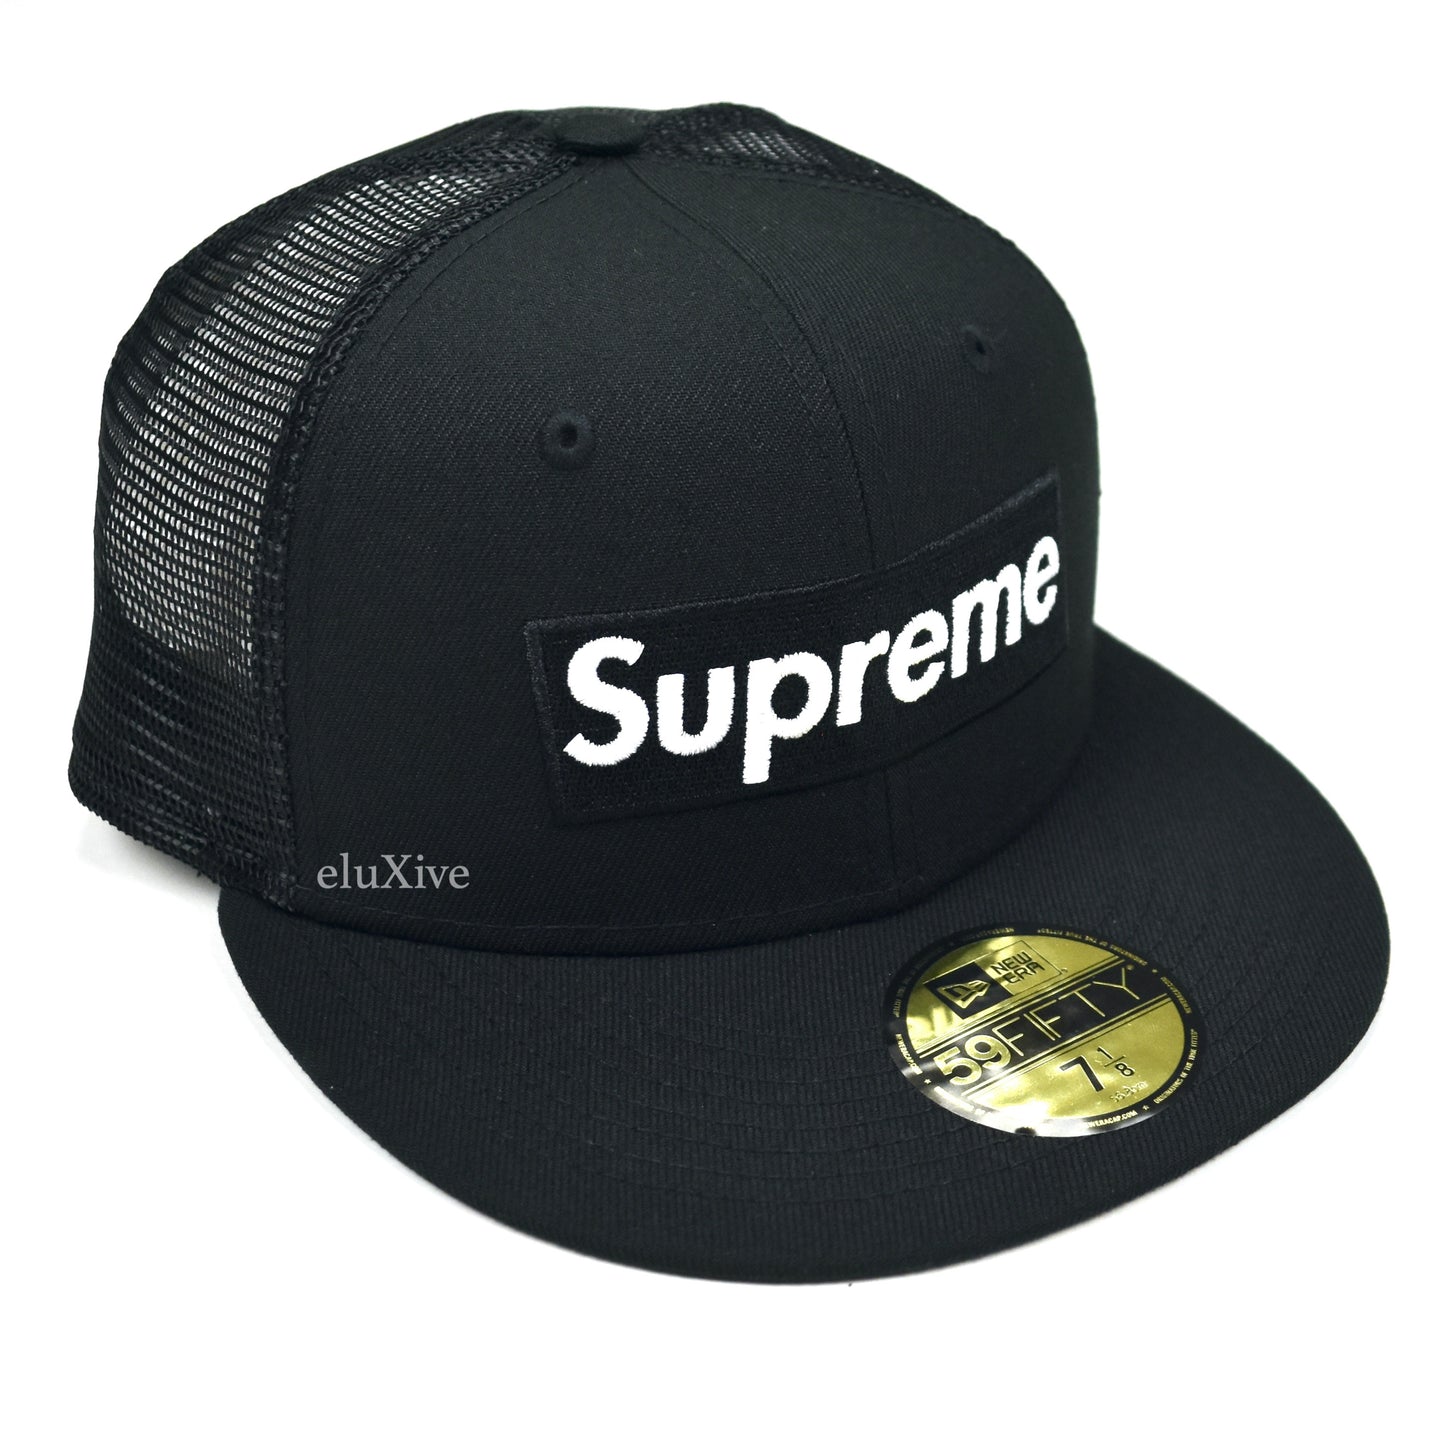 Supreme x New Era - Black Box Logo Mesh Back Hat